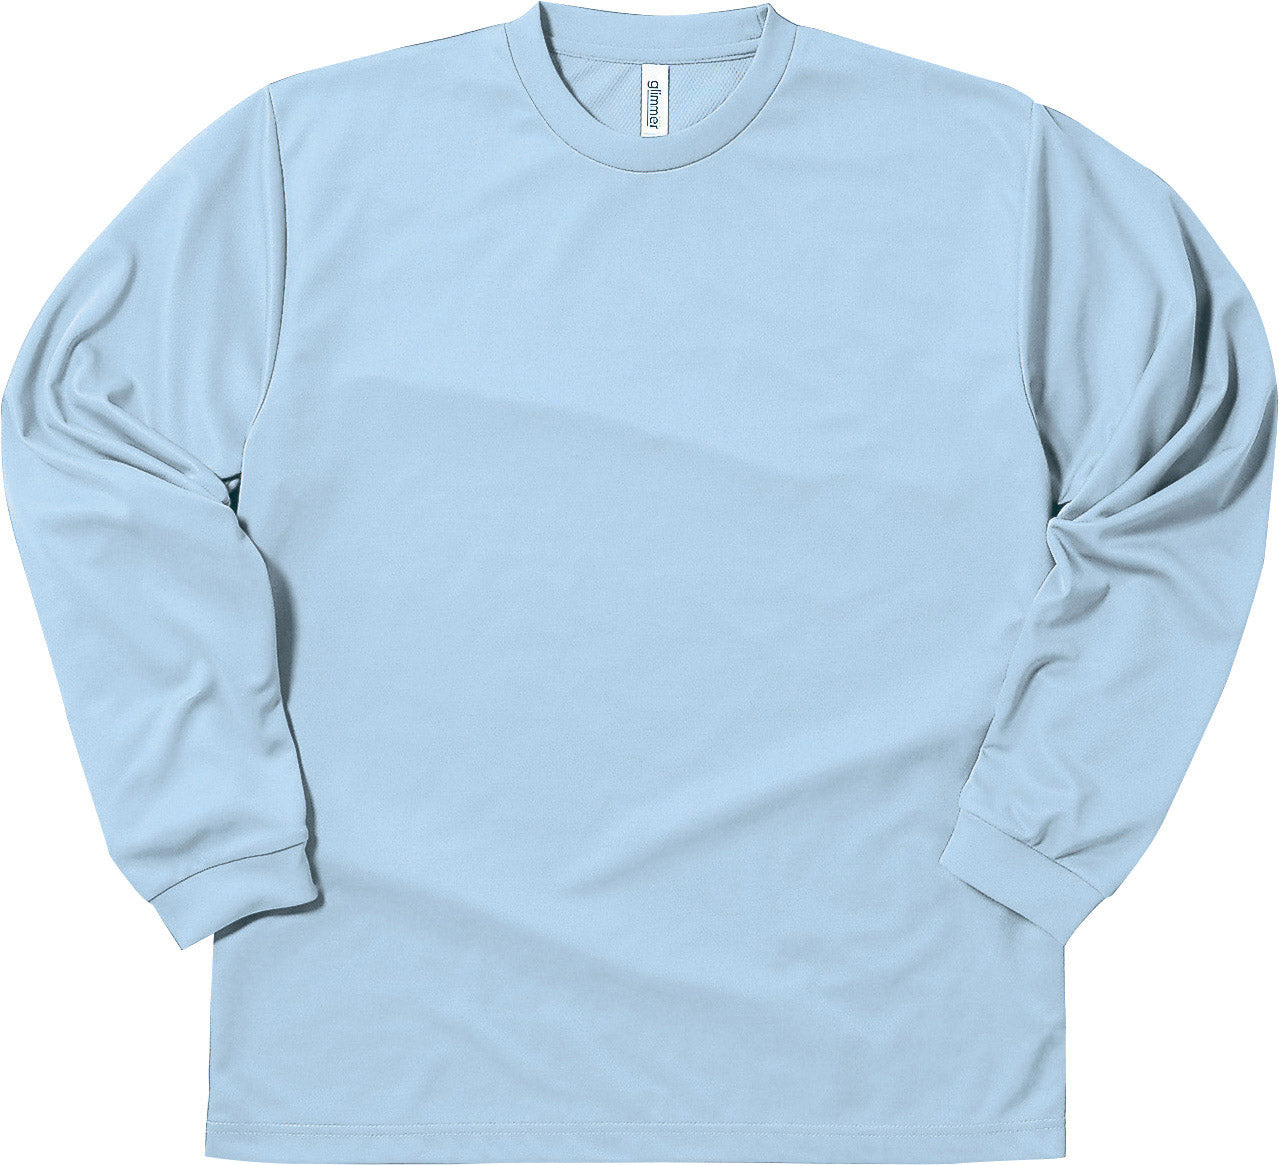 [Plus-1] 304-ALT 4.4oz Dry Long Sleeve T-shirt 140cm/150cm